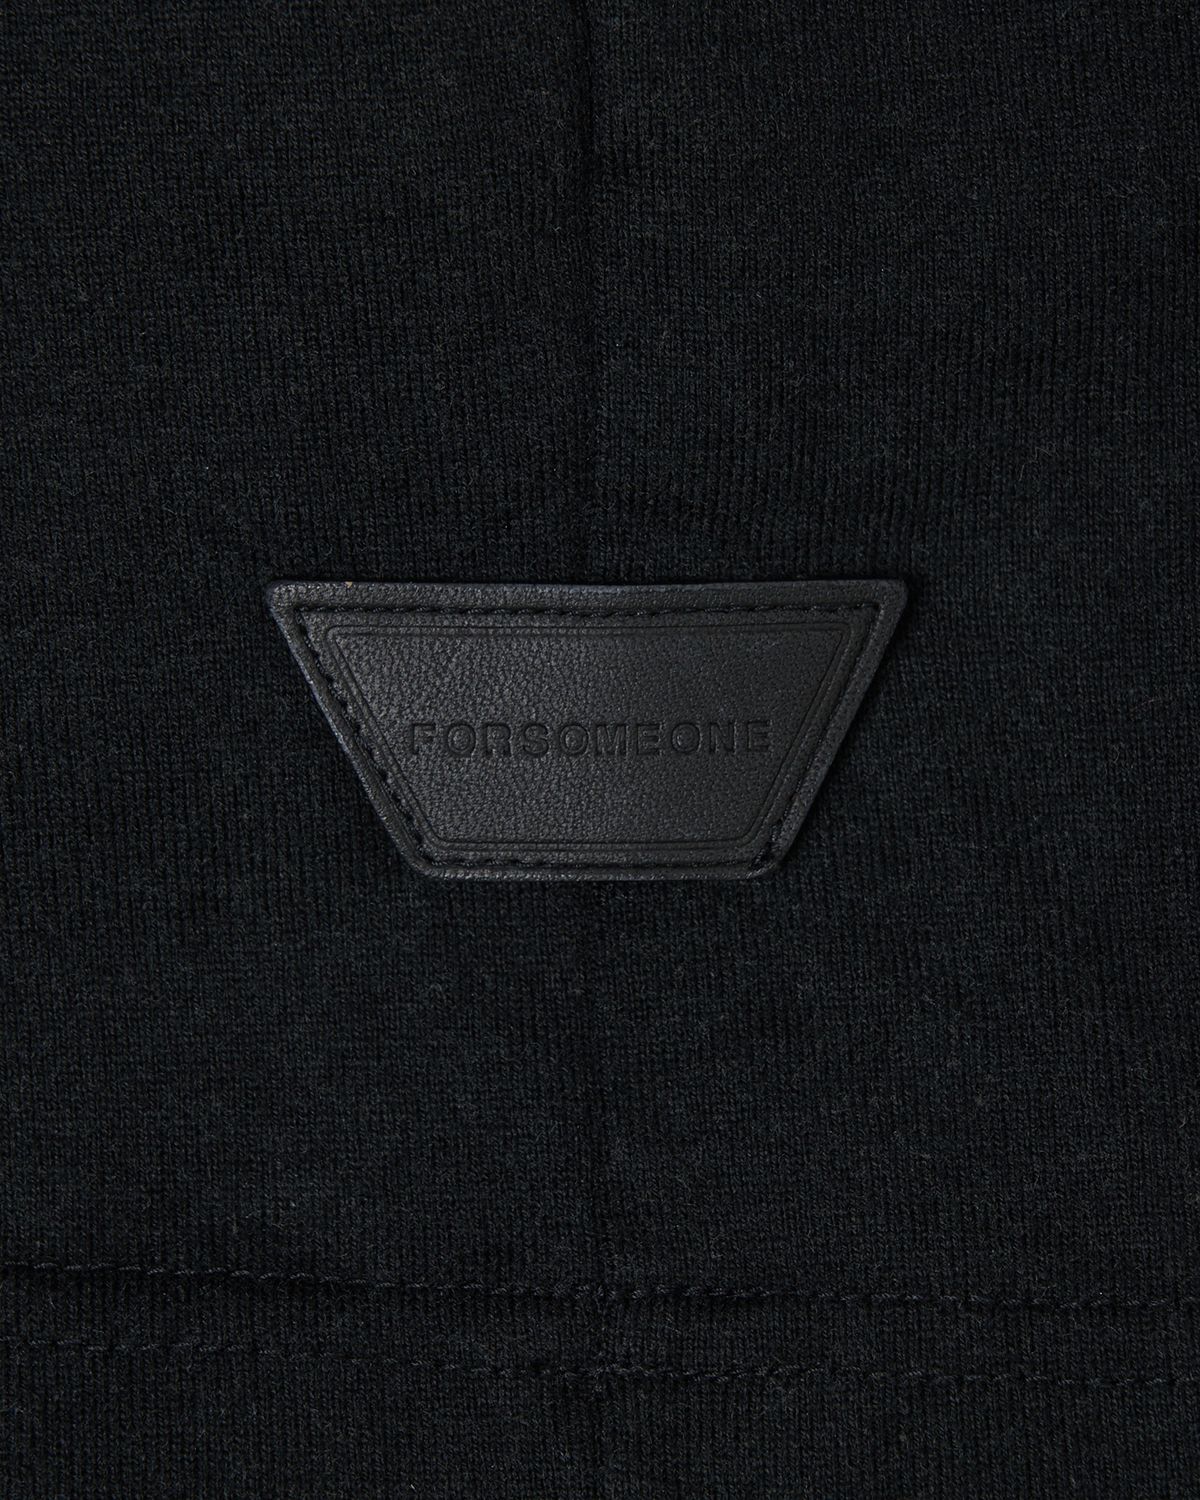 FORSOMEONE - K2 BIG TEE (BLACK) / Tシャツ ブラック | chord online